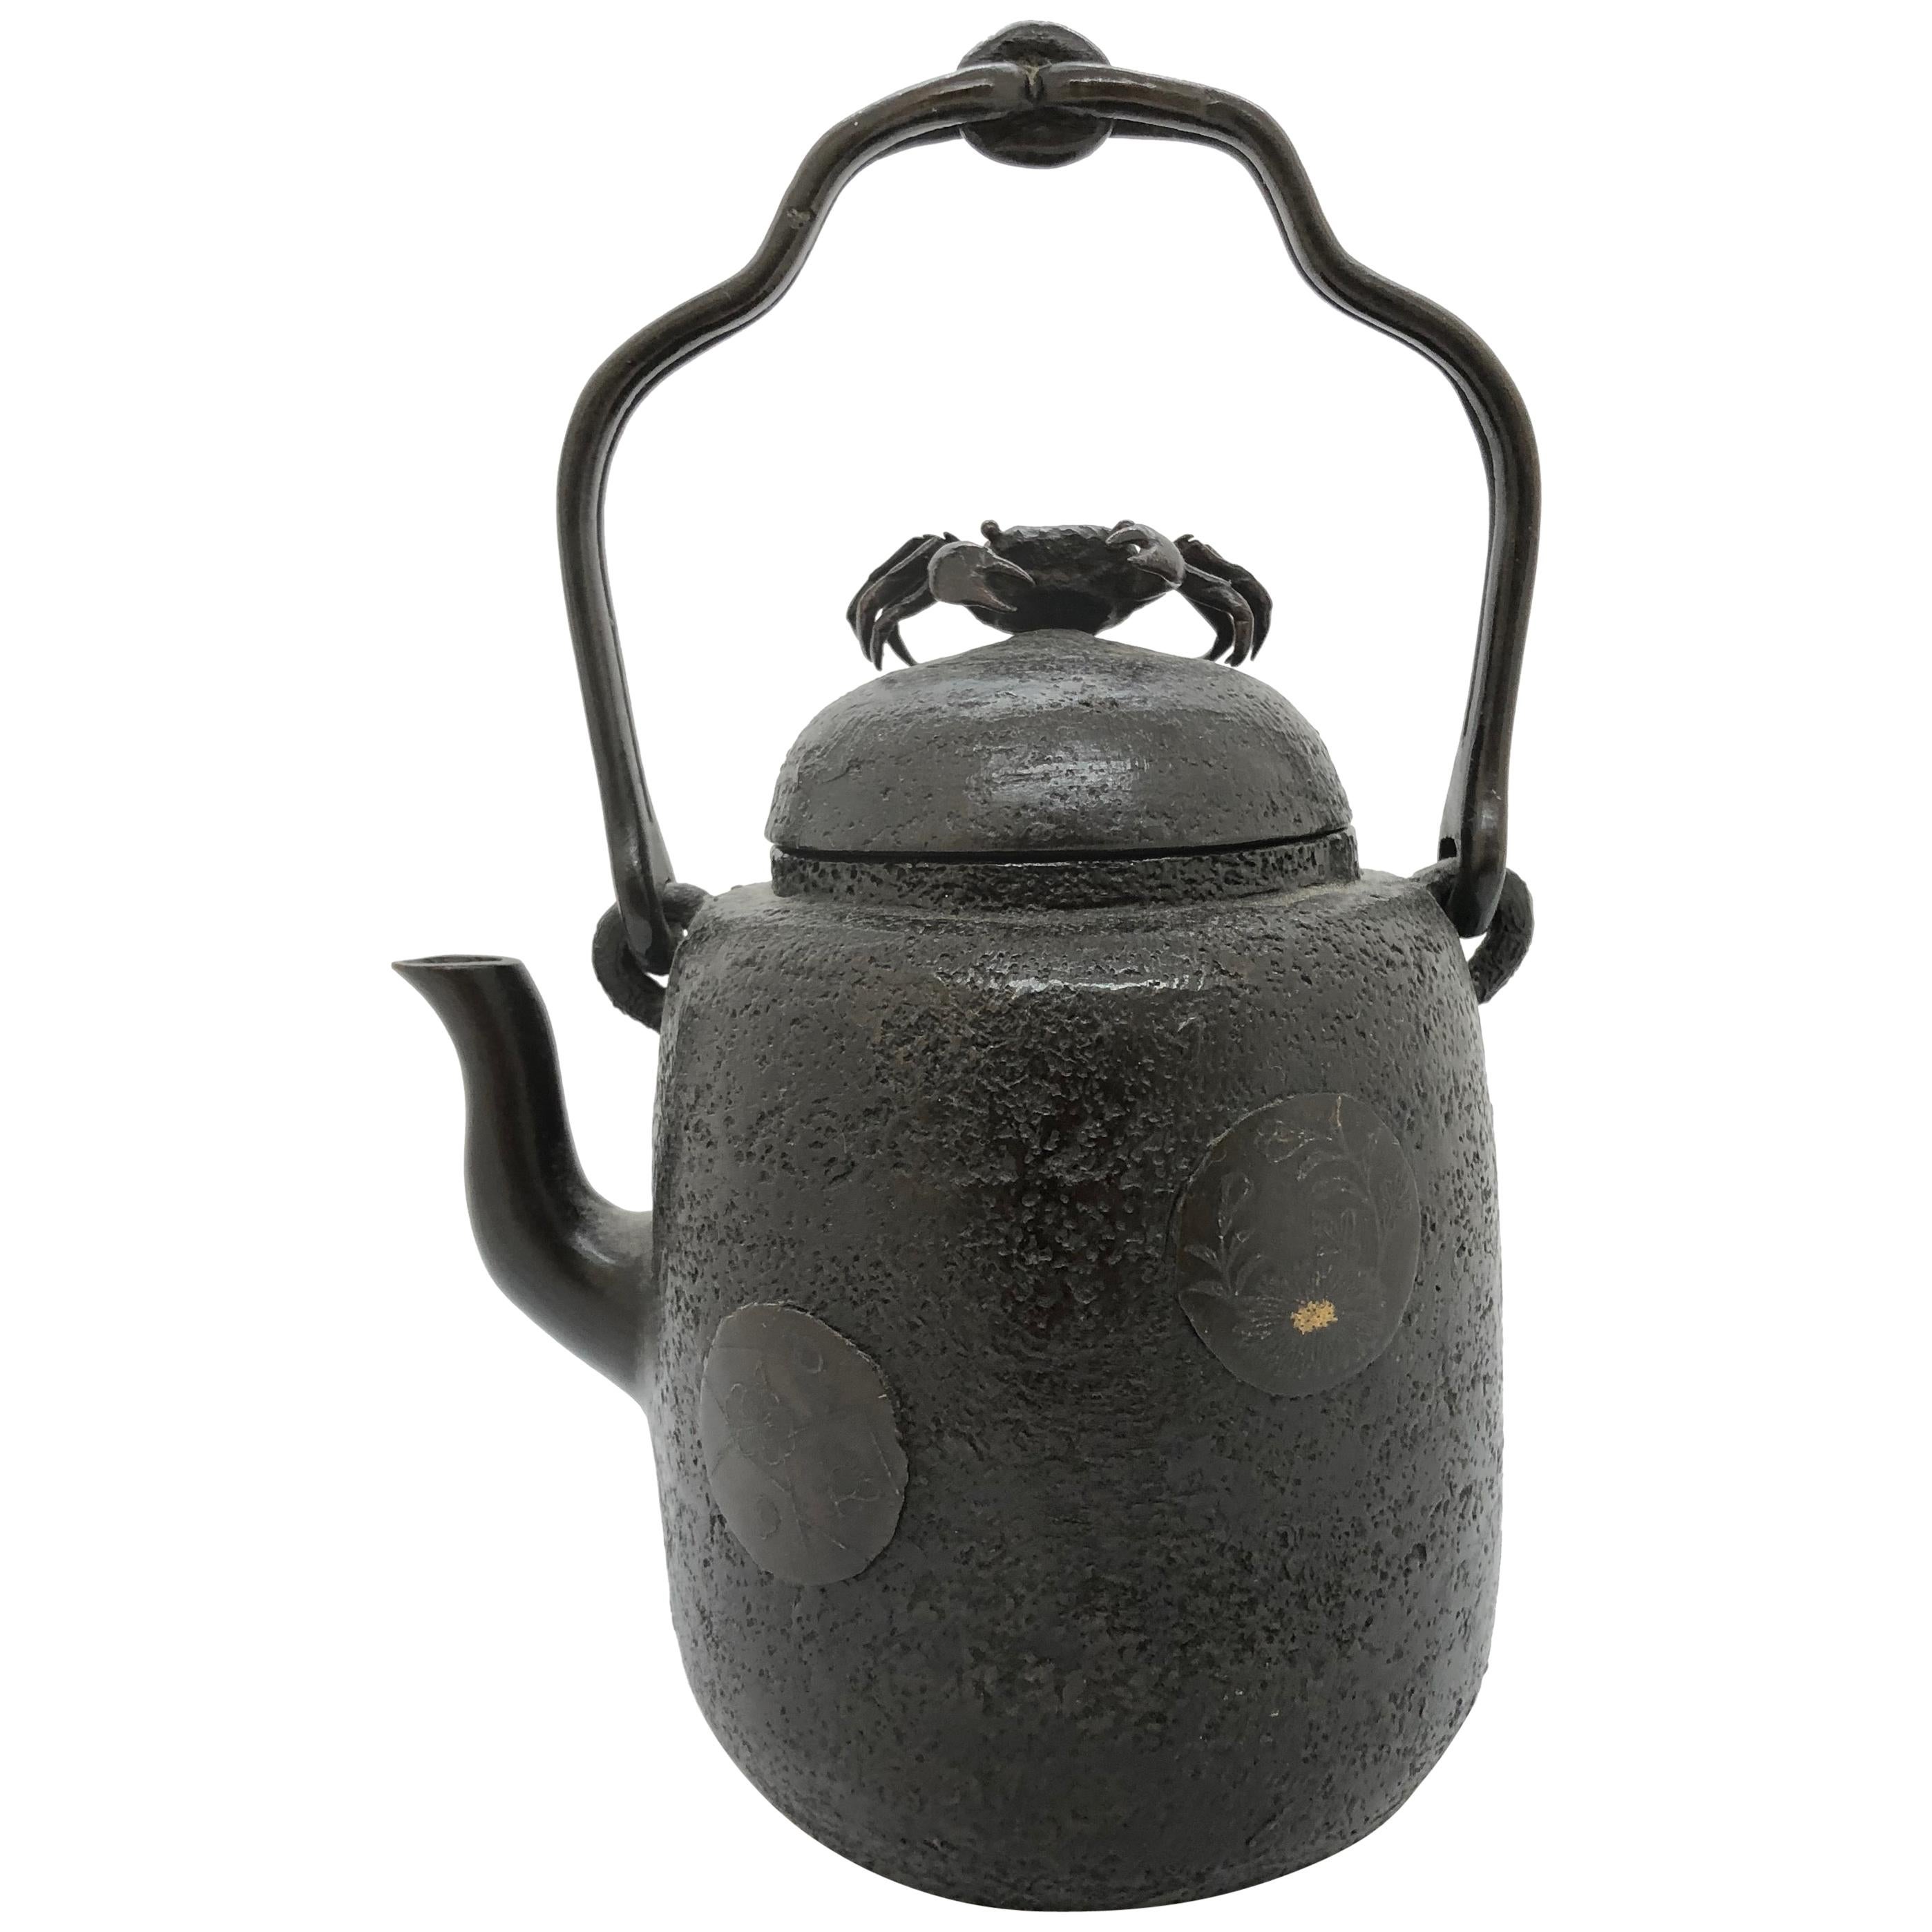 Japanese Teapot, Late 19th Century